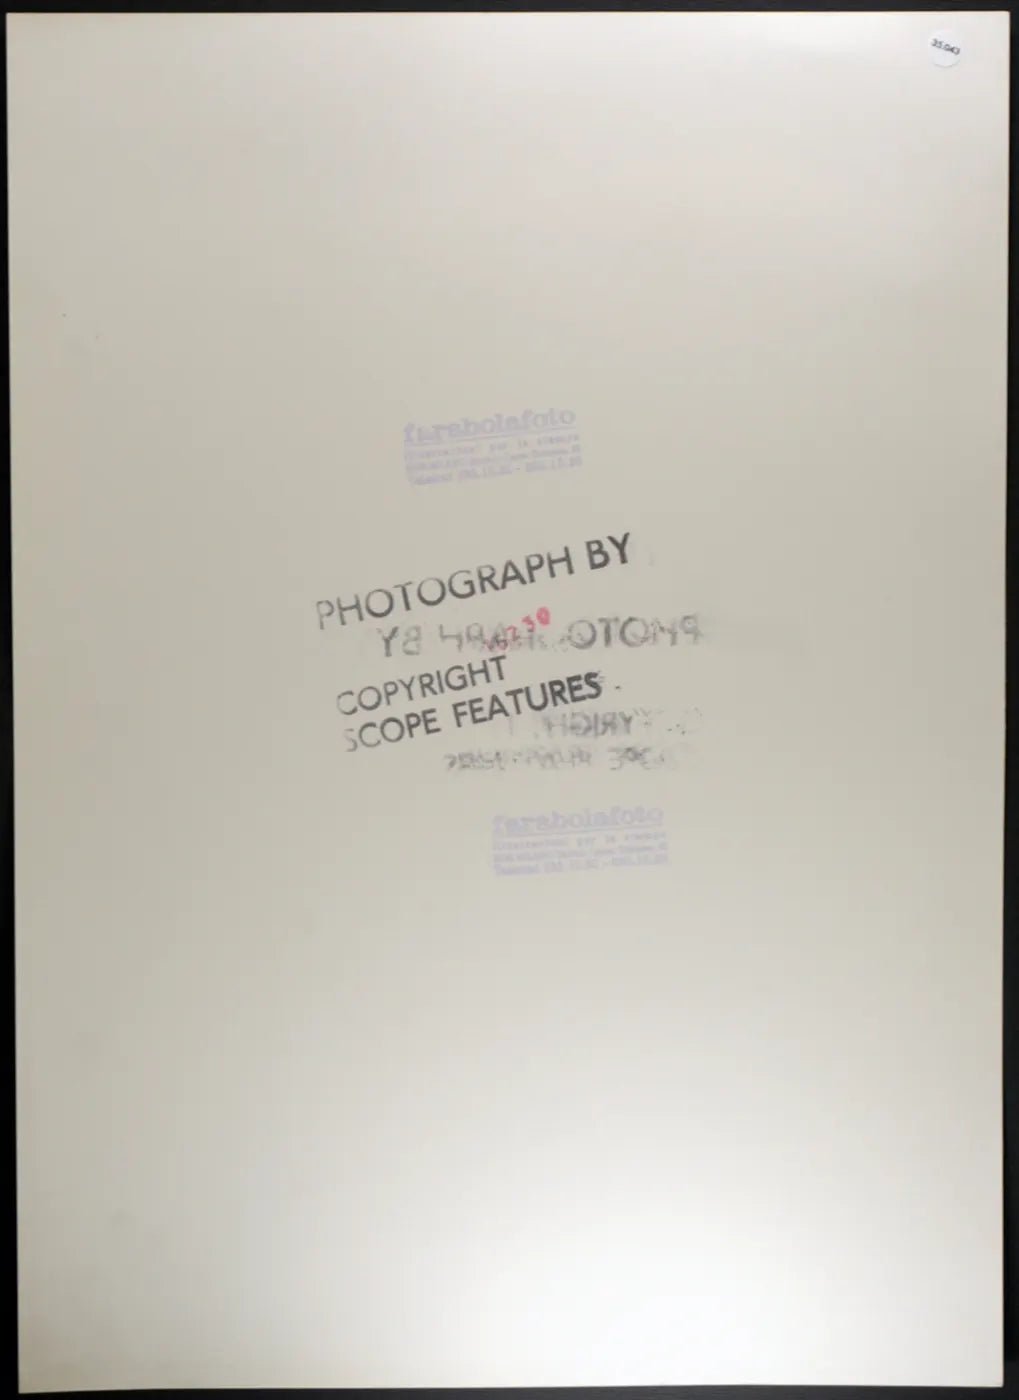 John Travolta Film Staying Alive Ft 35043 - Stampa 27x37 cm - Farabola Stampa ai sali d'argento